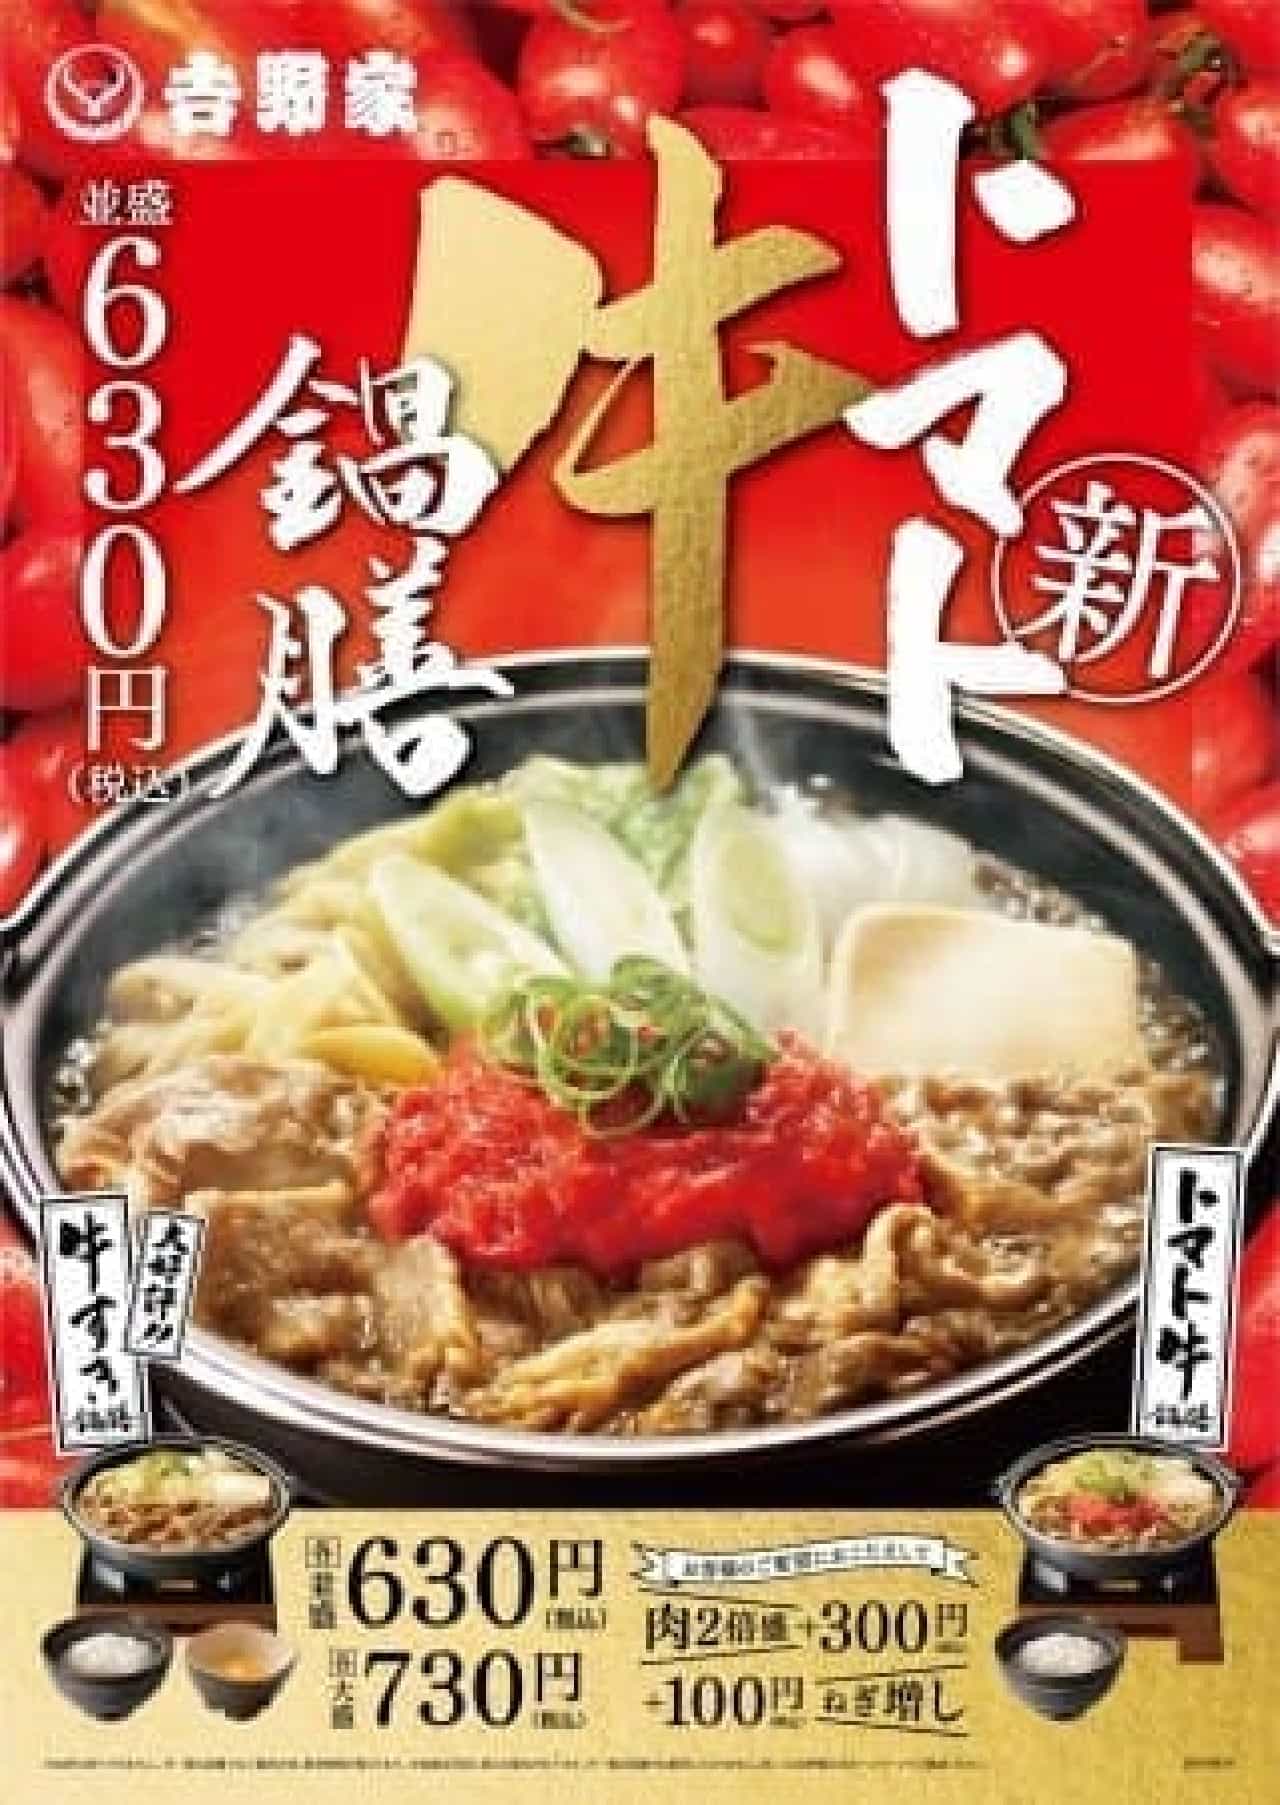 "Tomato beef sukiyaki set" is now available at Yoshinoya!